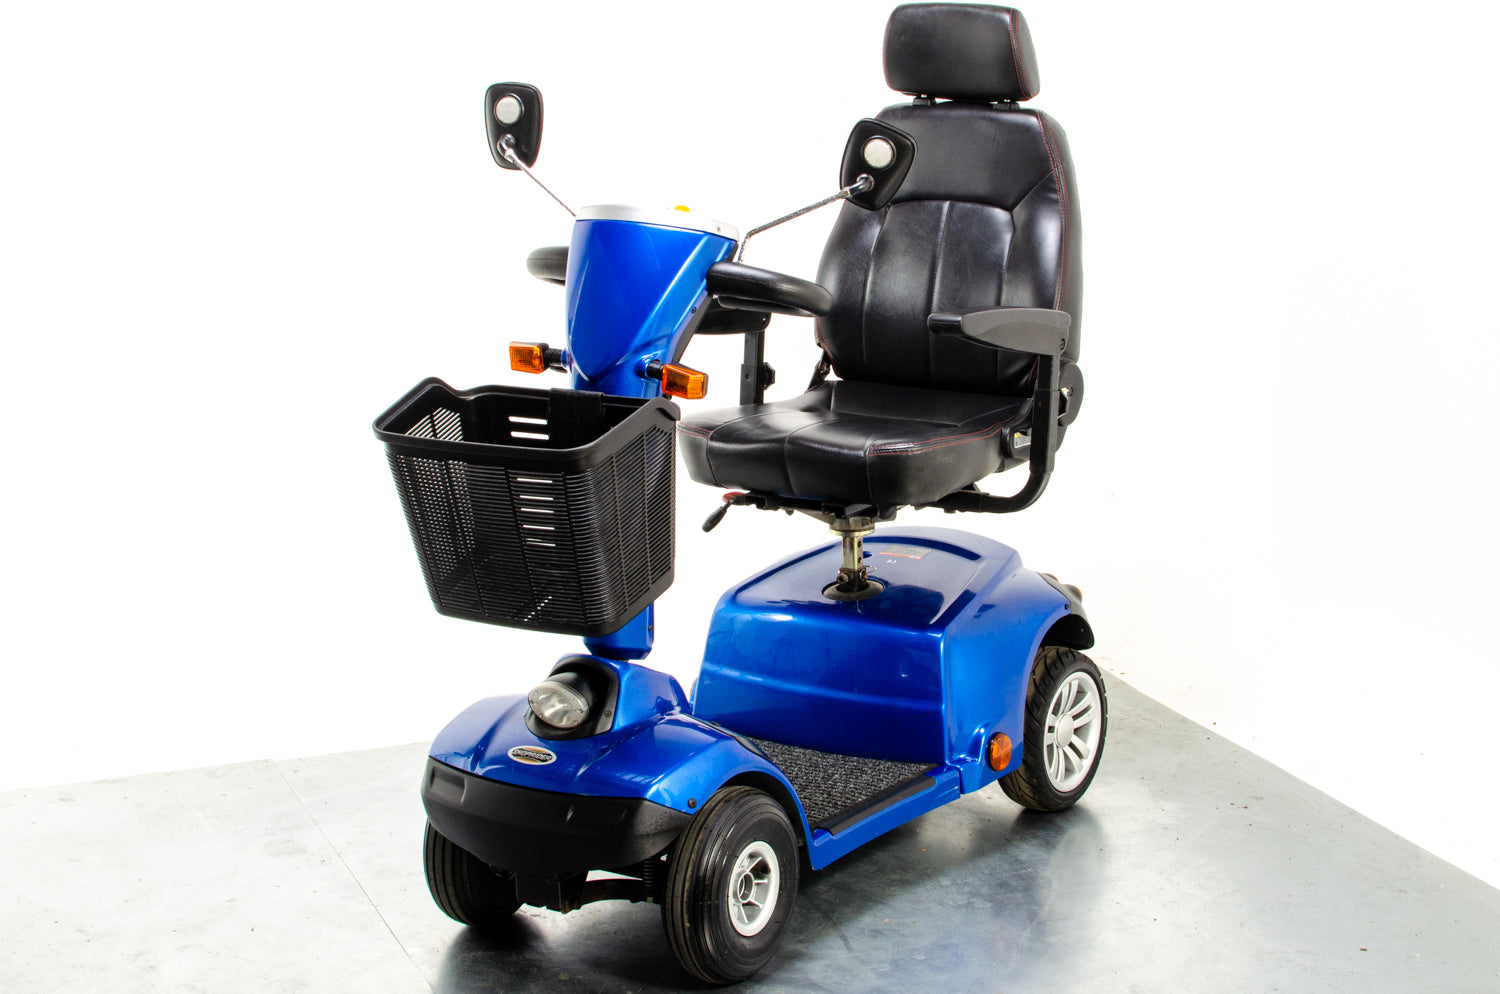 Shoprider 888 Venturer Used Mobility Scooter 6mph Blue